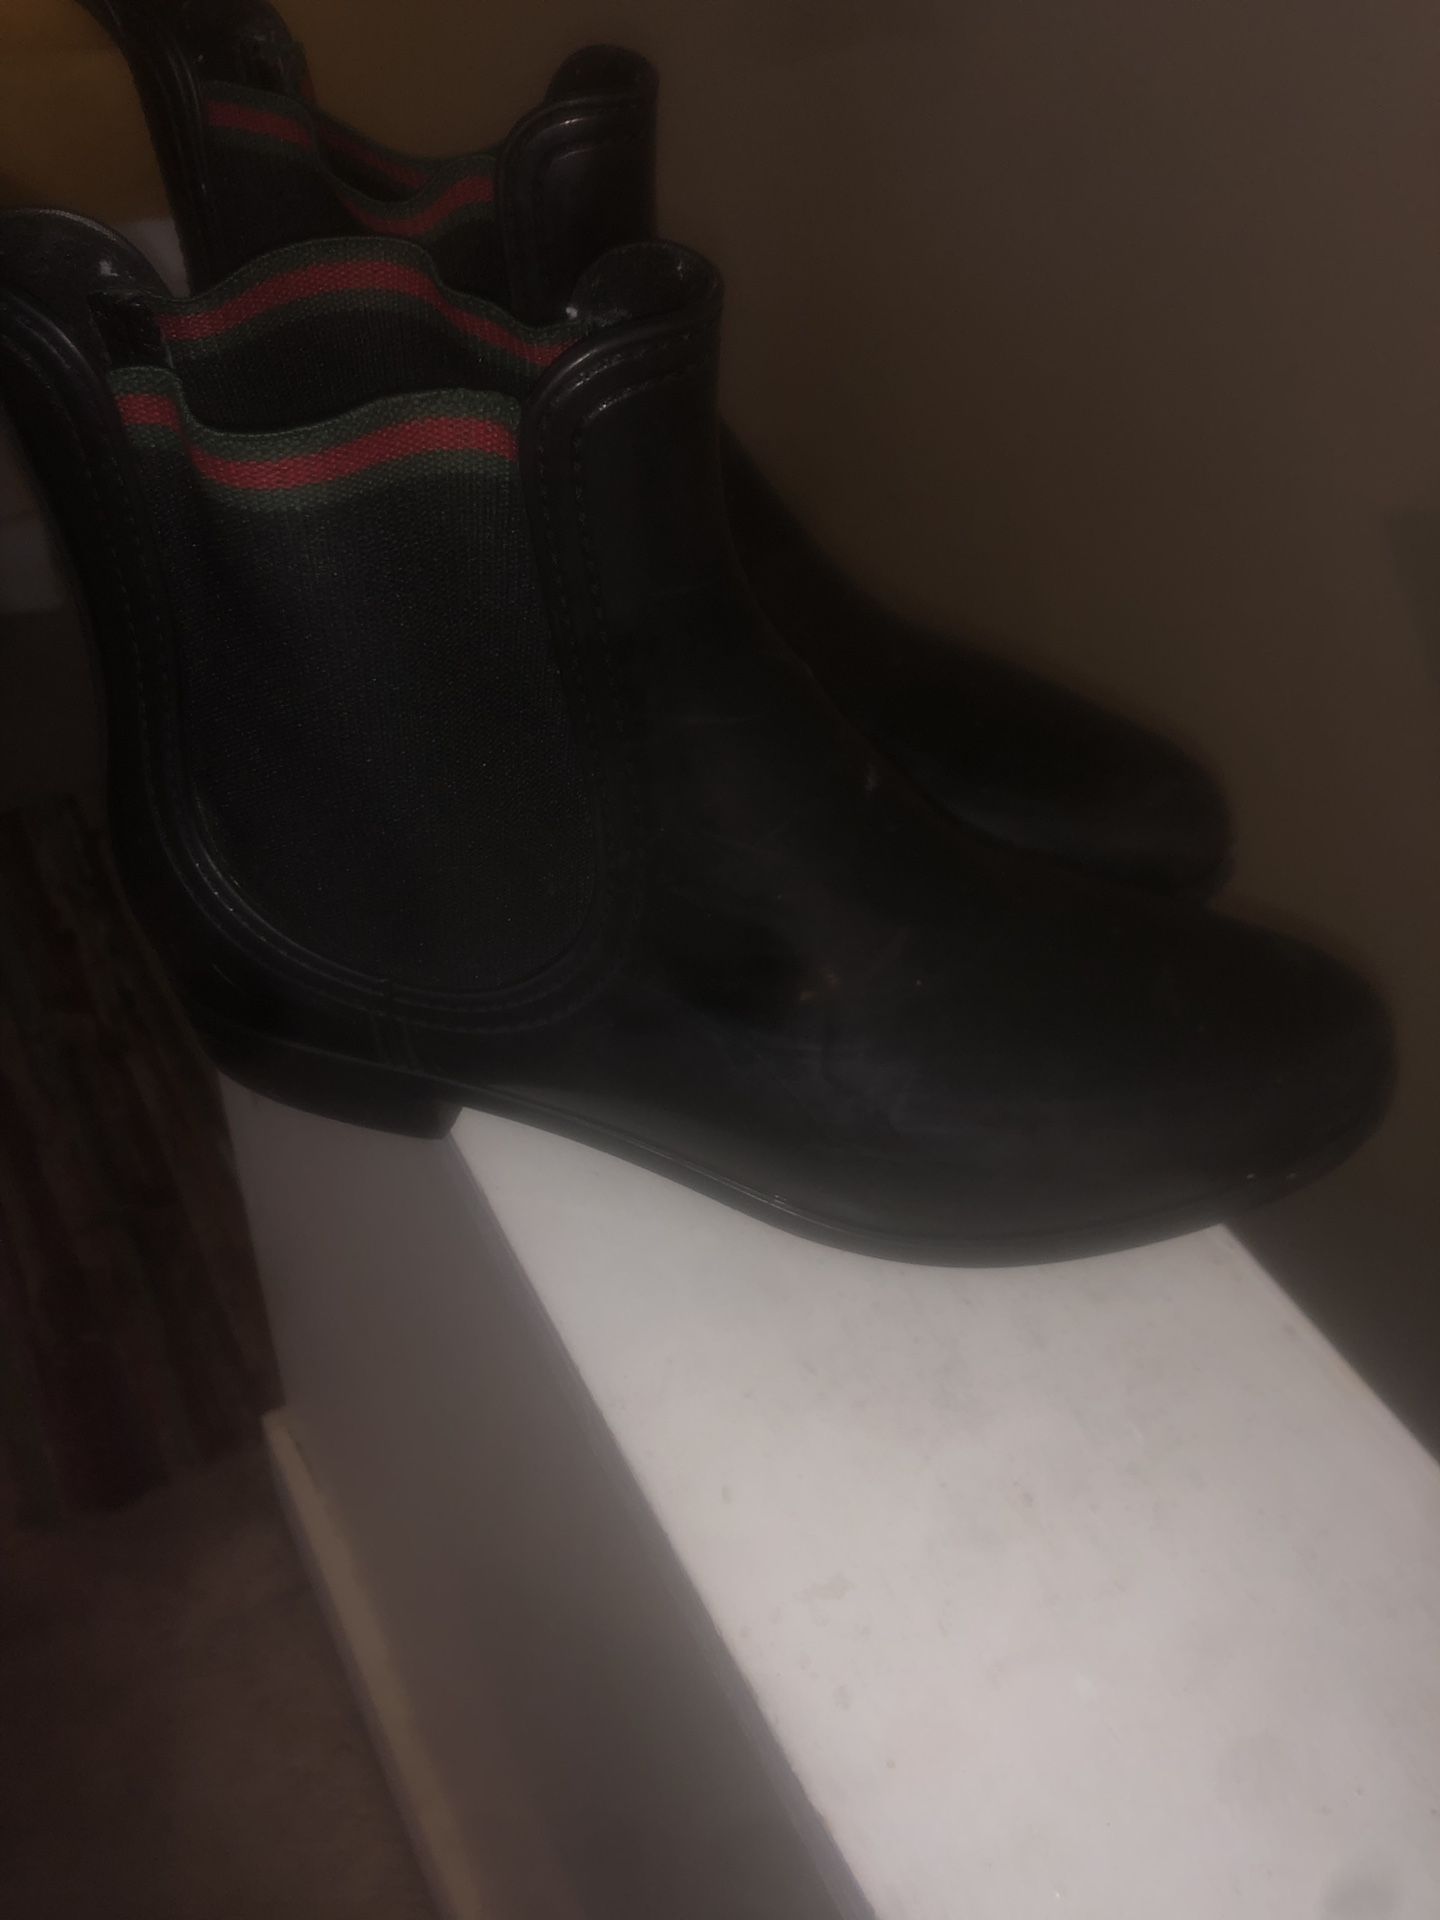 Gucci Rain Boots Size 39